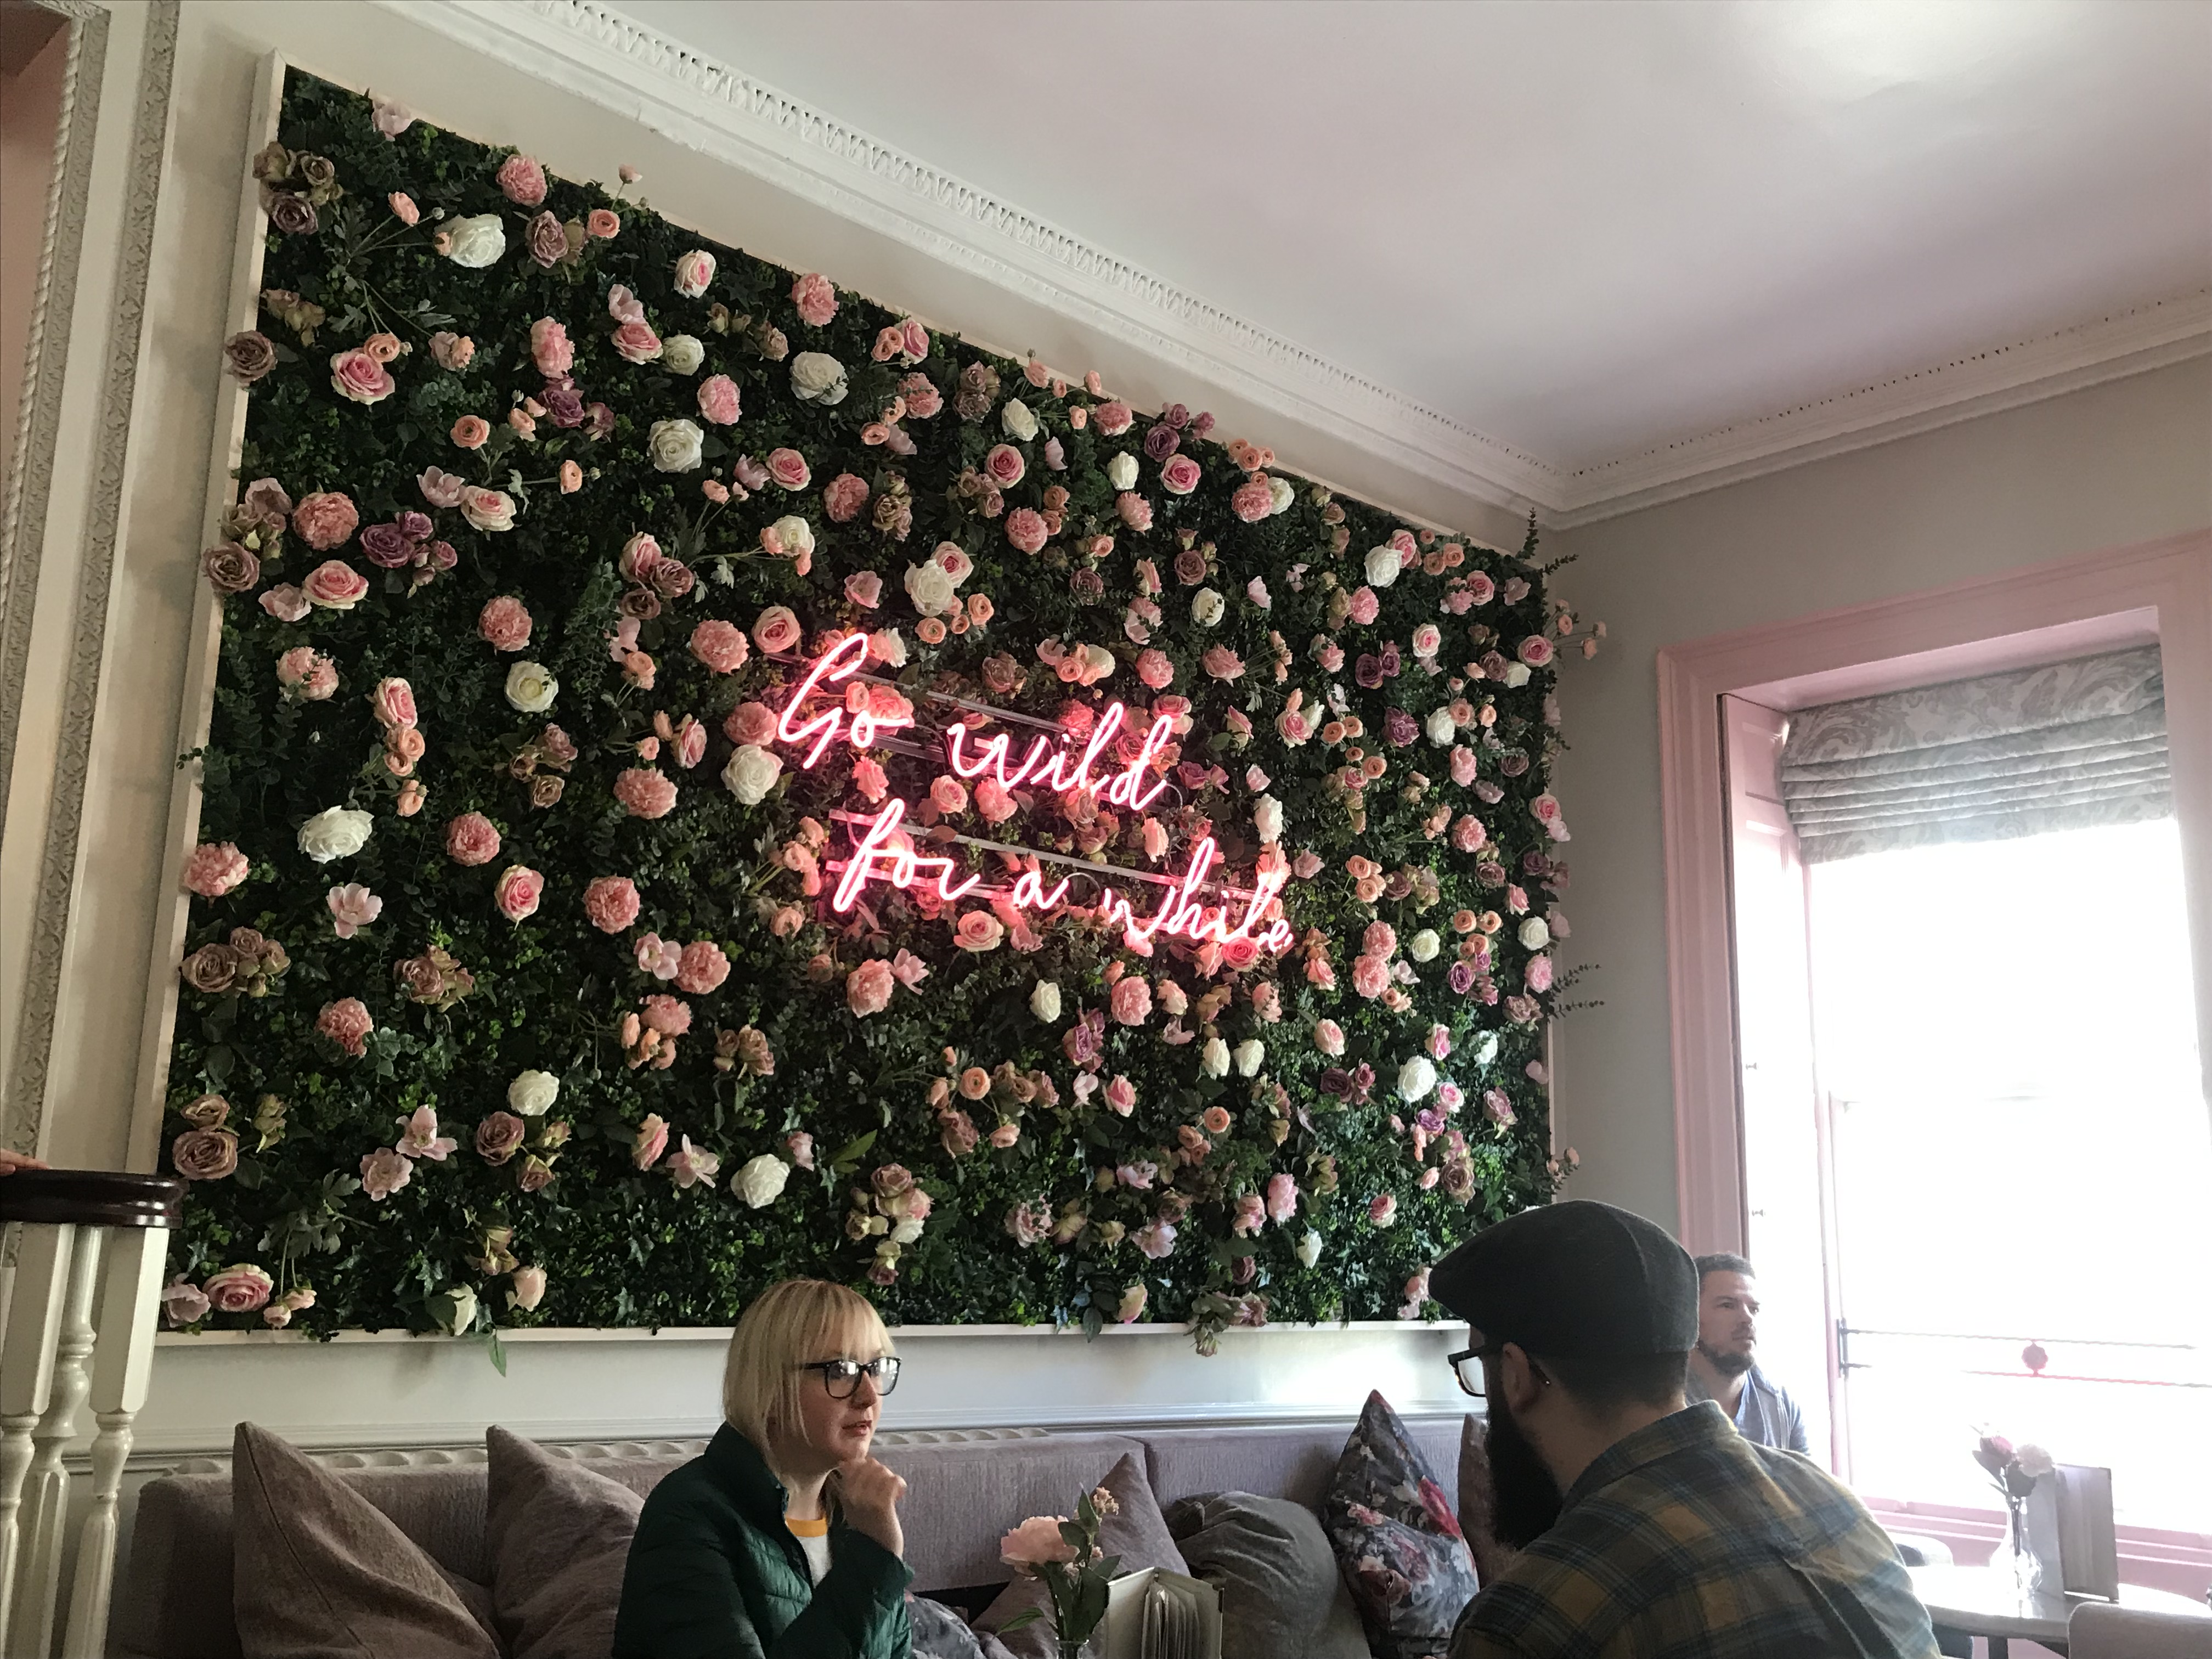 Pug Cafe Bristol - The Florist Interior